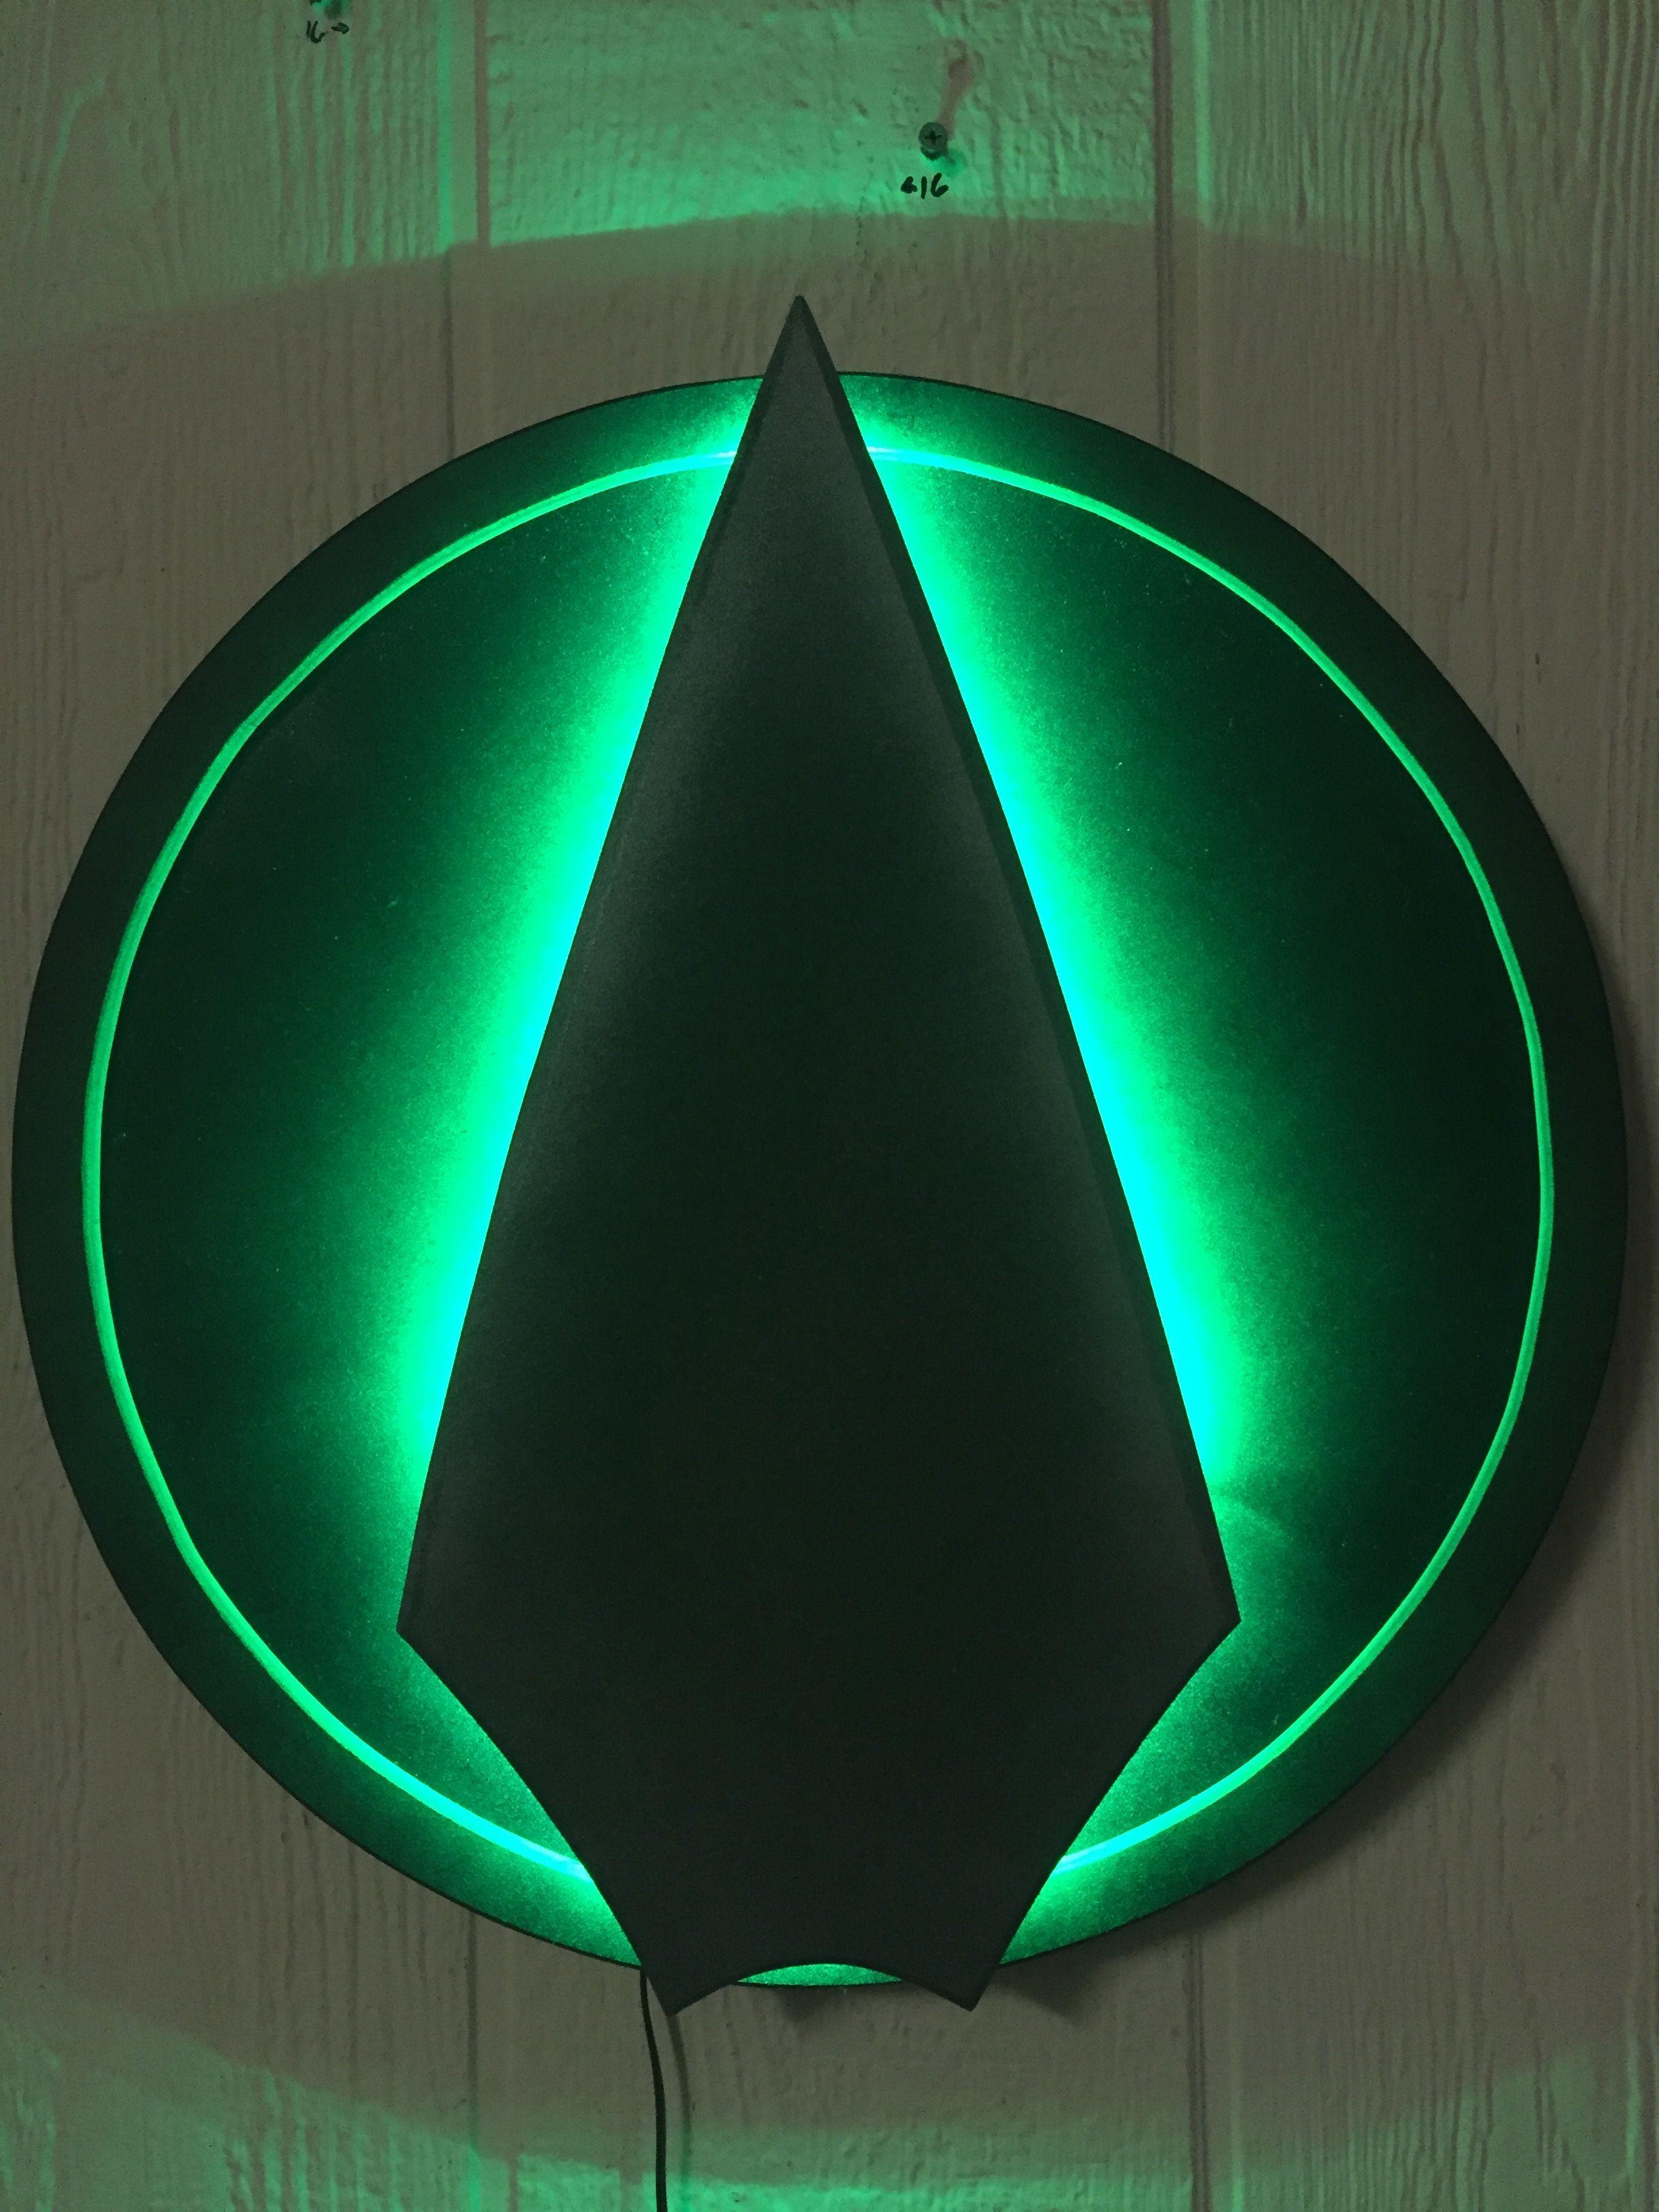 Green Arrow Logo - Green Arrow Logo Illuminated Wall Display | Home decor | Pinterest ...